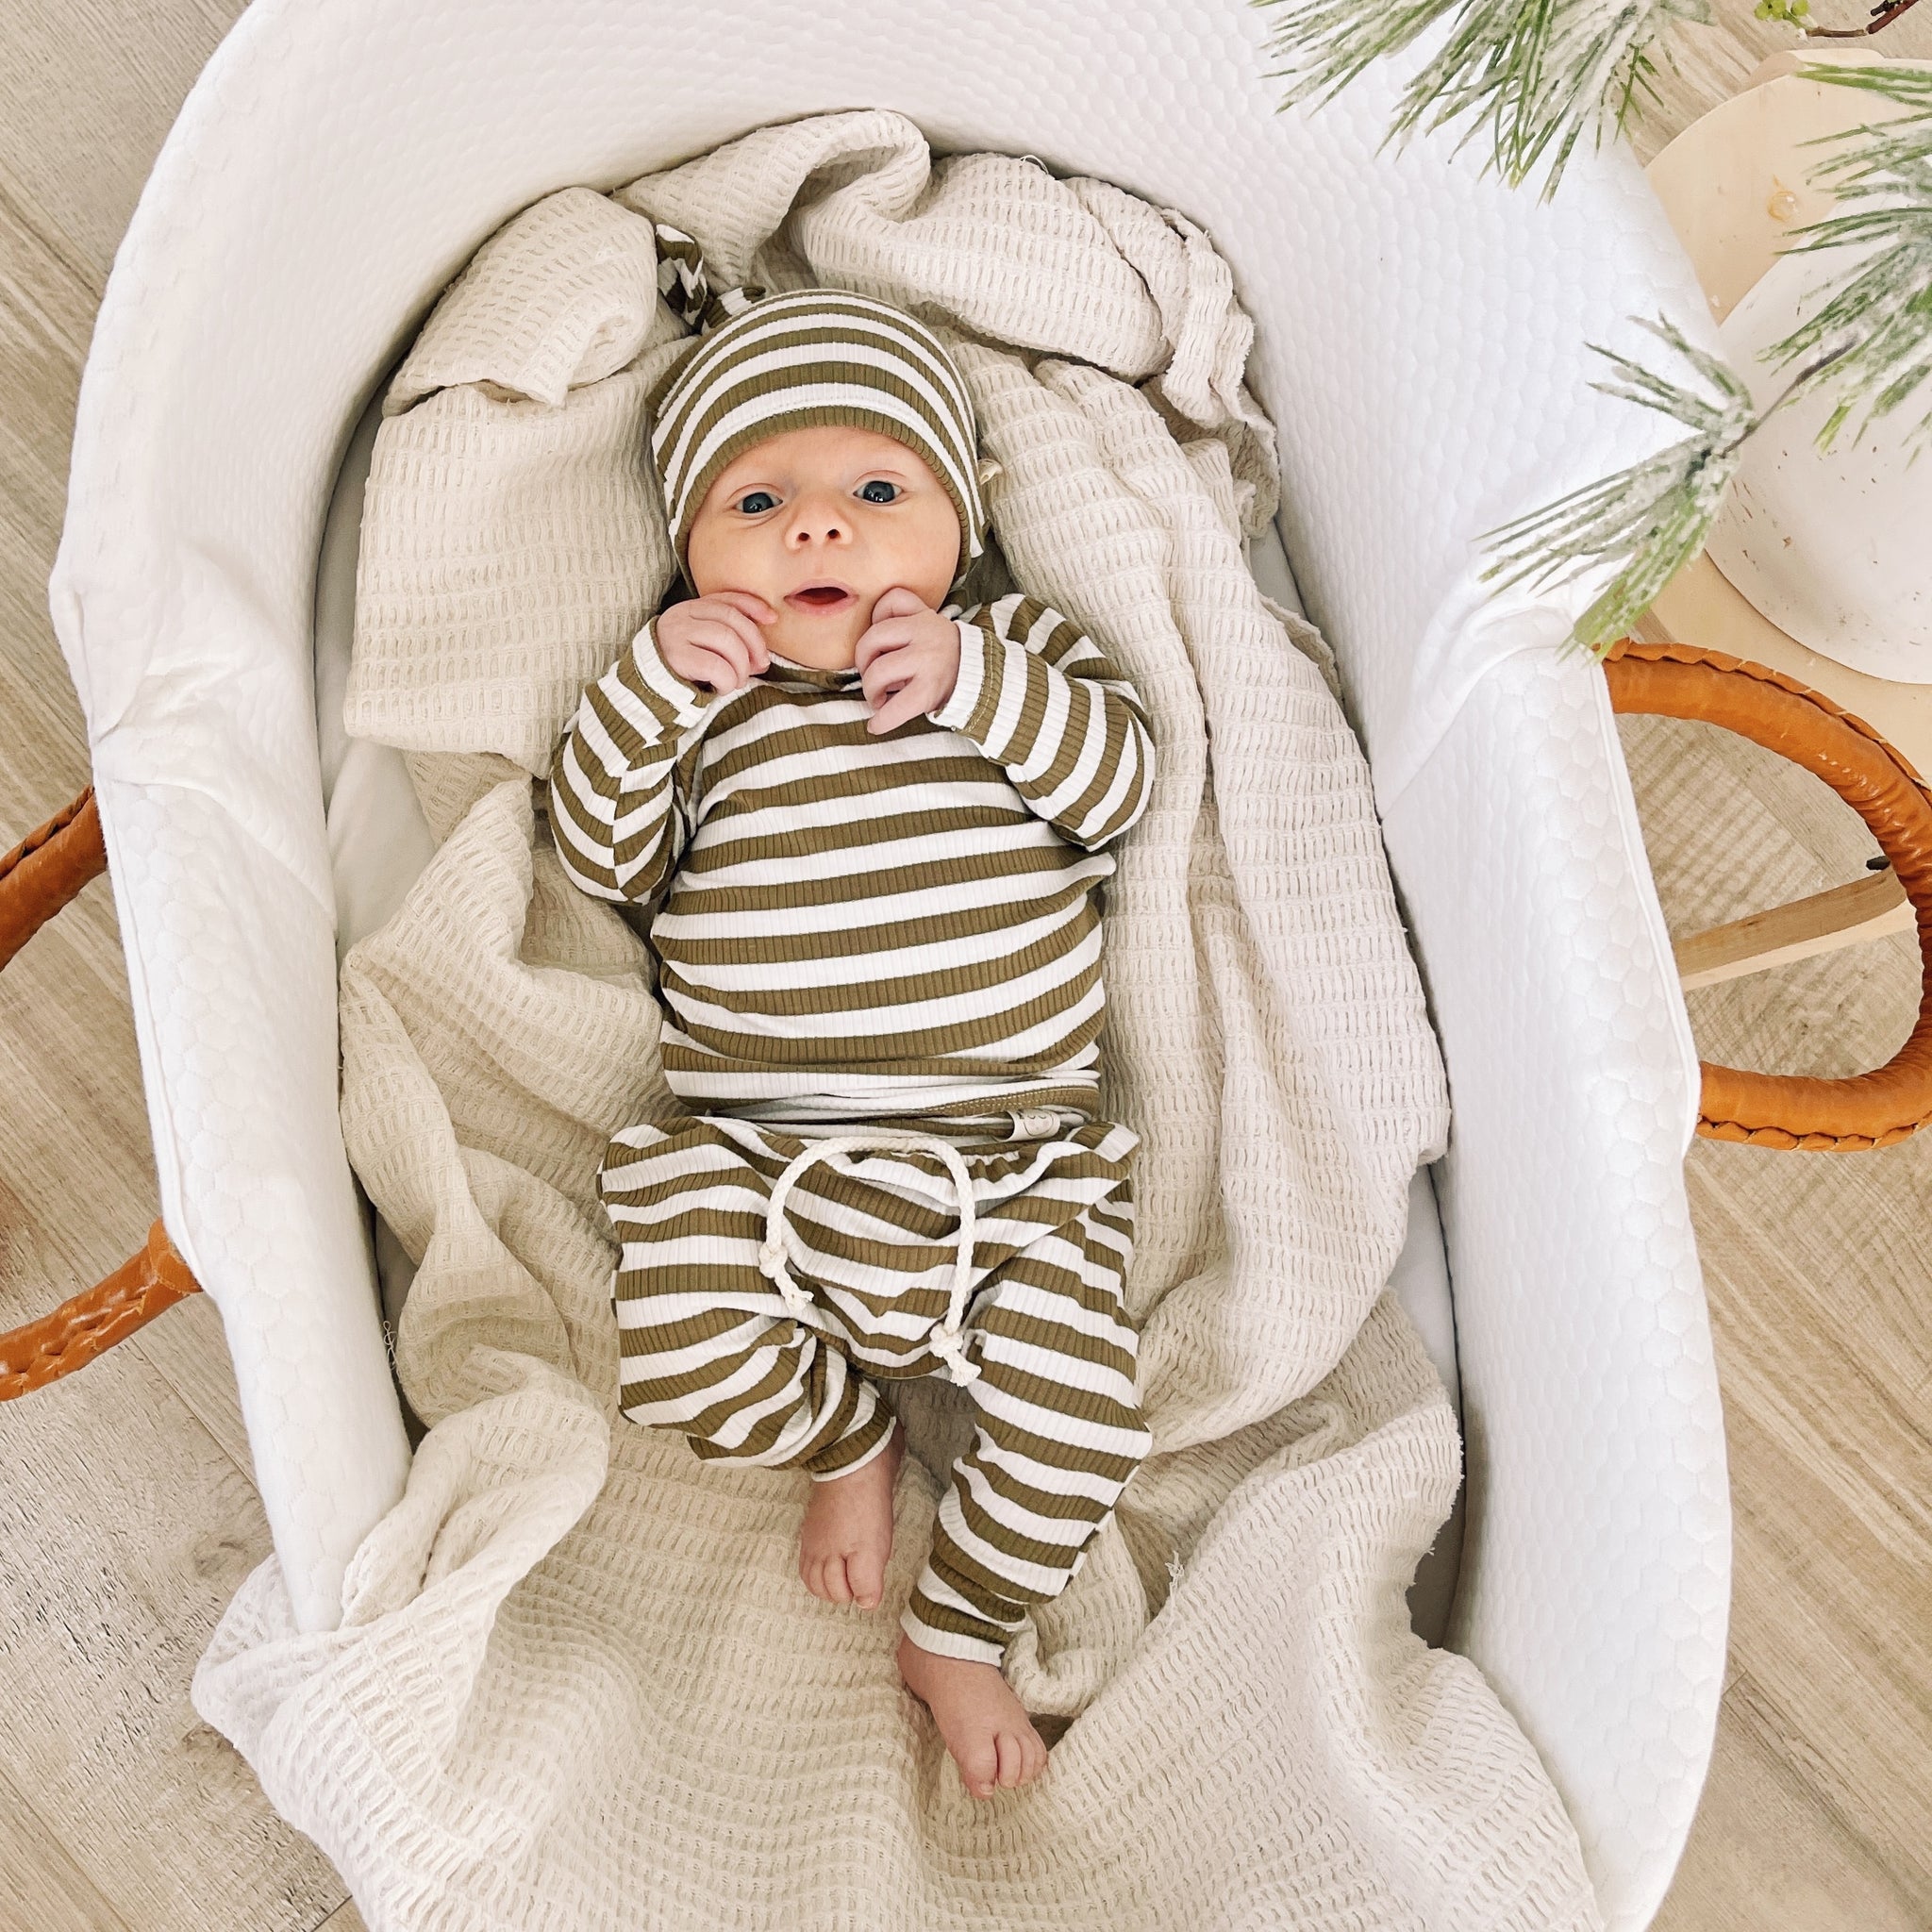 Baby Clothes | Tiny, Newborn & Infants Clothing | Argos